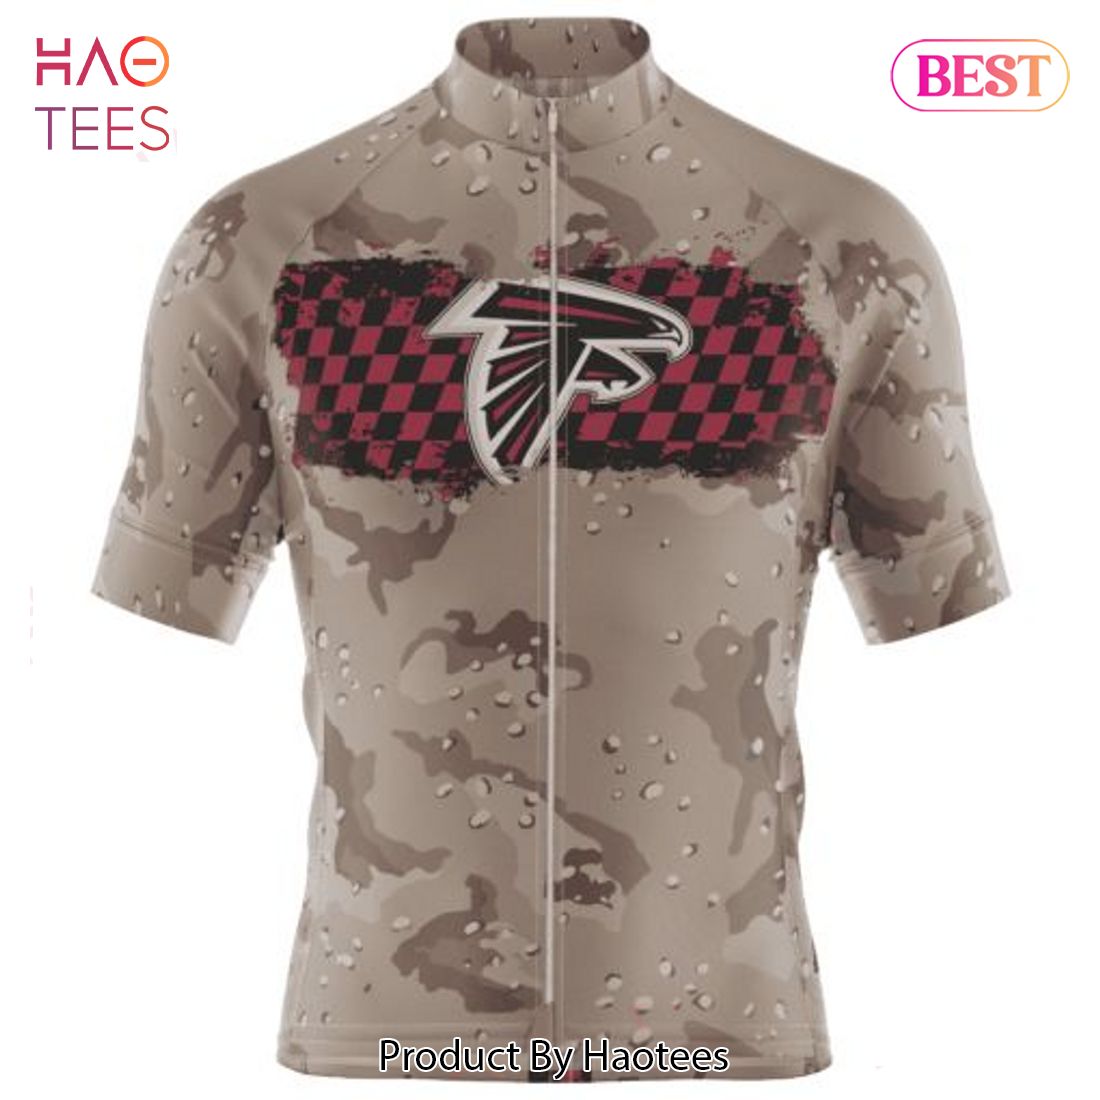 HOT NFL Atlanta Falcons Special Desert Camo Design Cycling Jersey Hoodie